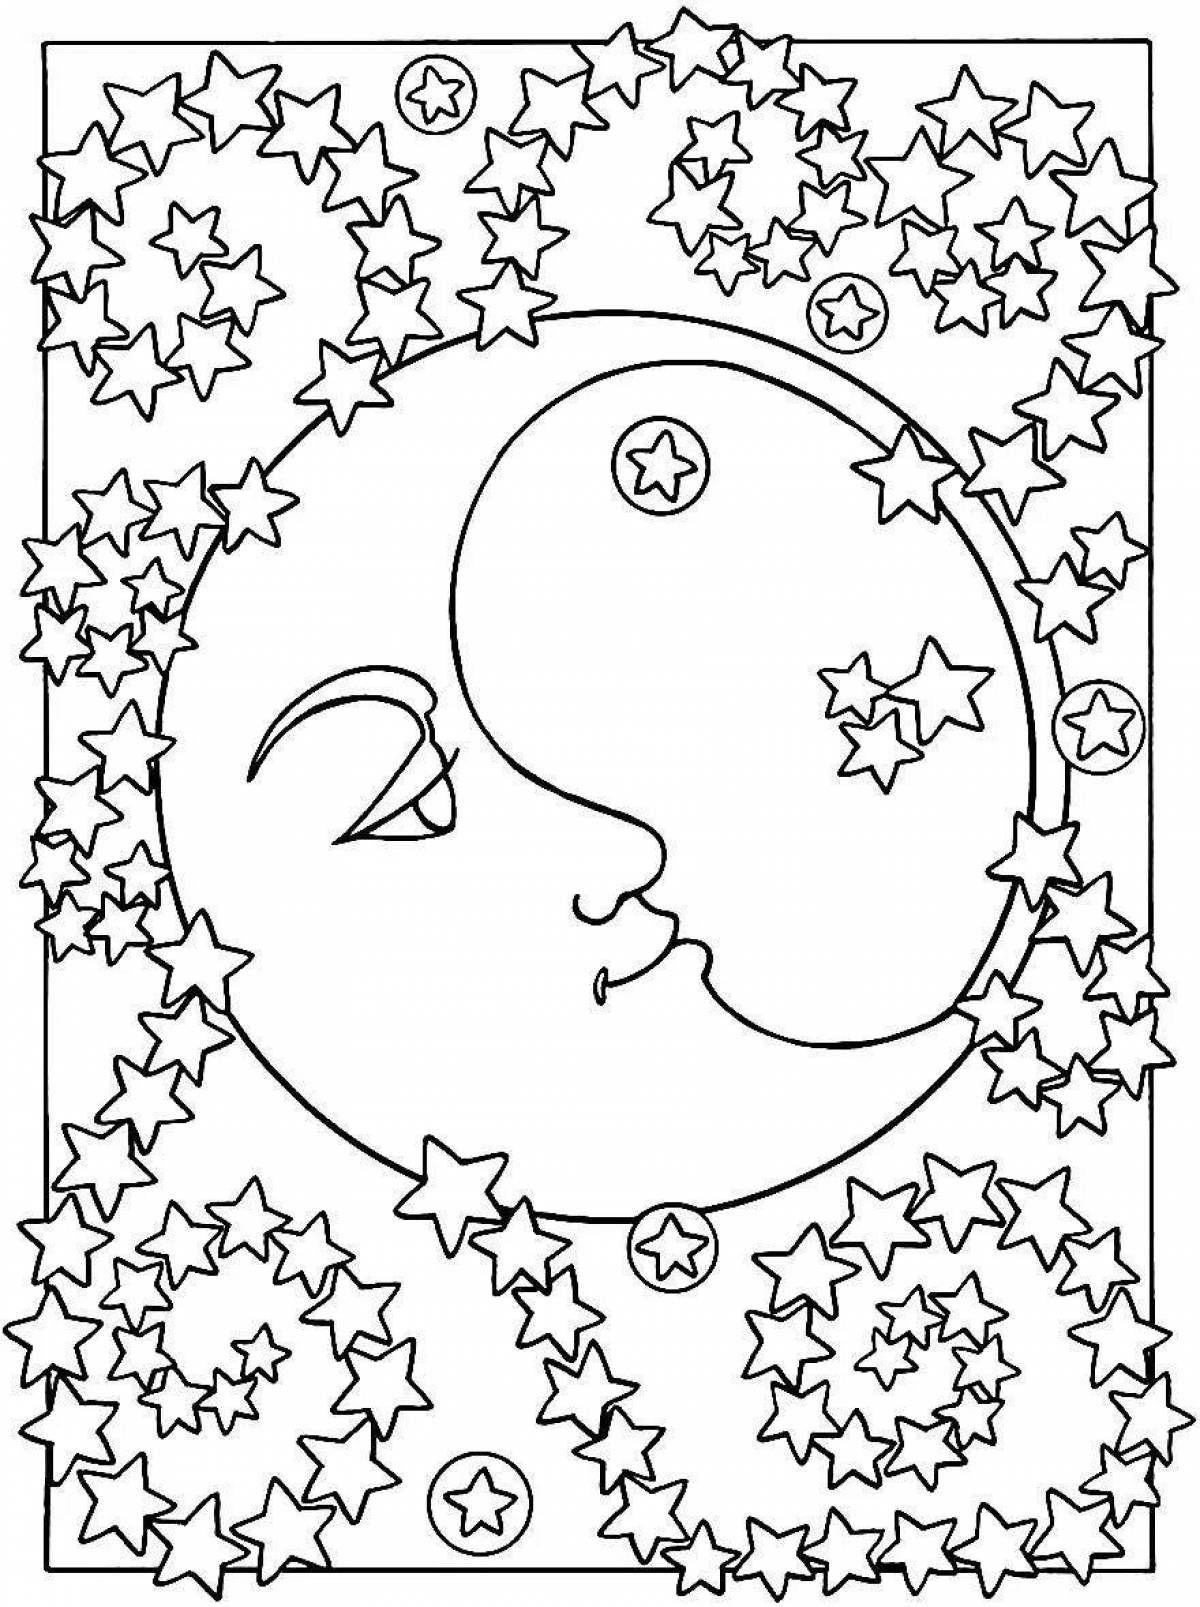 Shining moon and stars coloring book